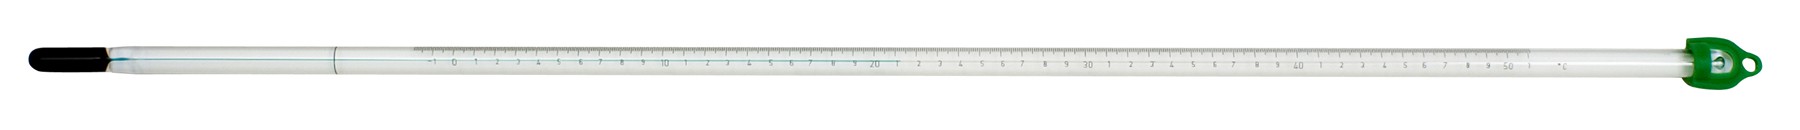 H-B DURAC Plus Precision Liquid-In-Glass Thermometer; 30 to 124F, 76mm Immersion, Organic Liquid Fill